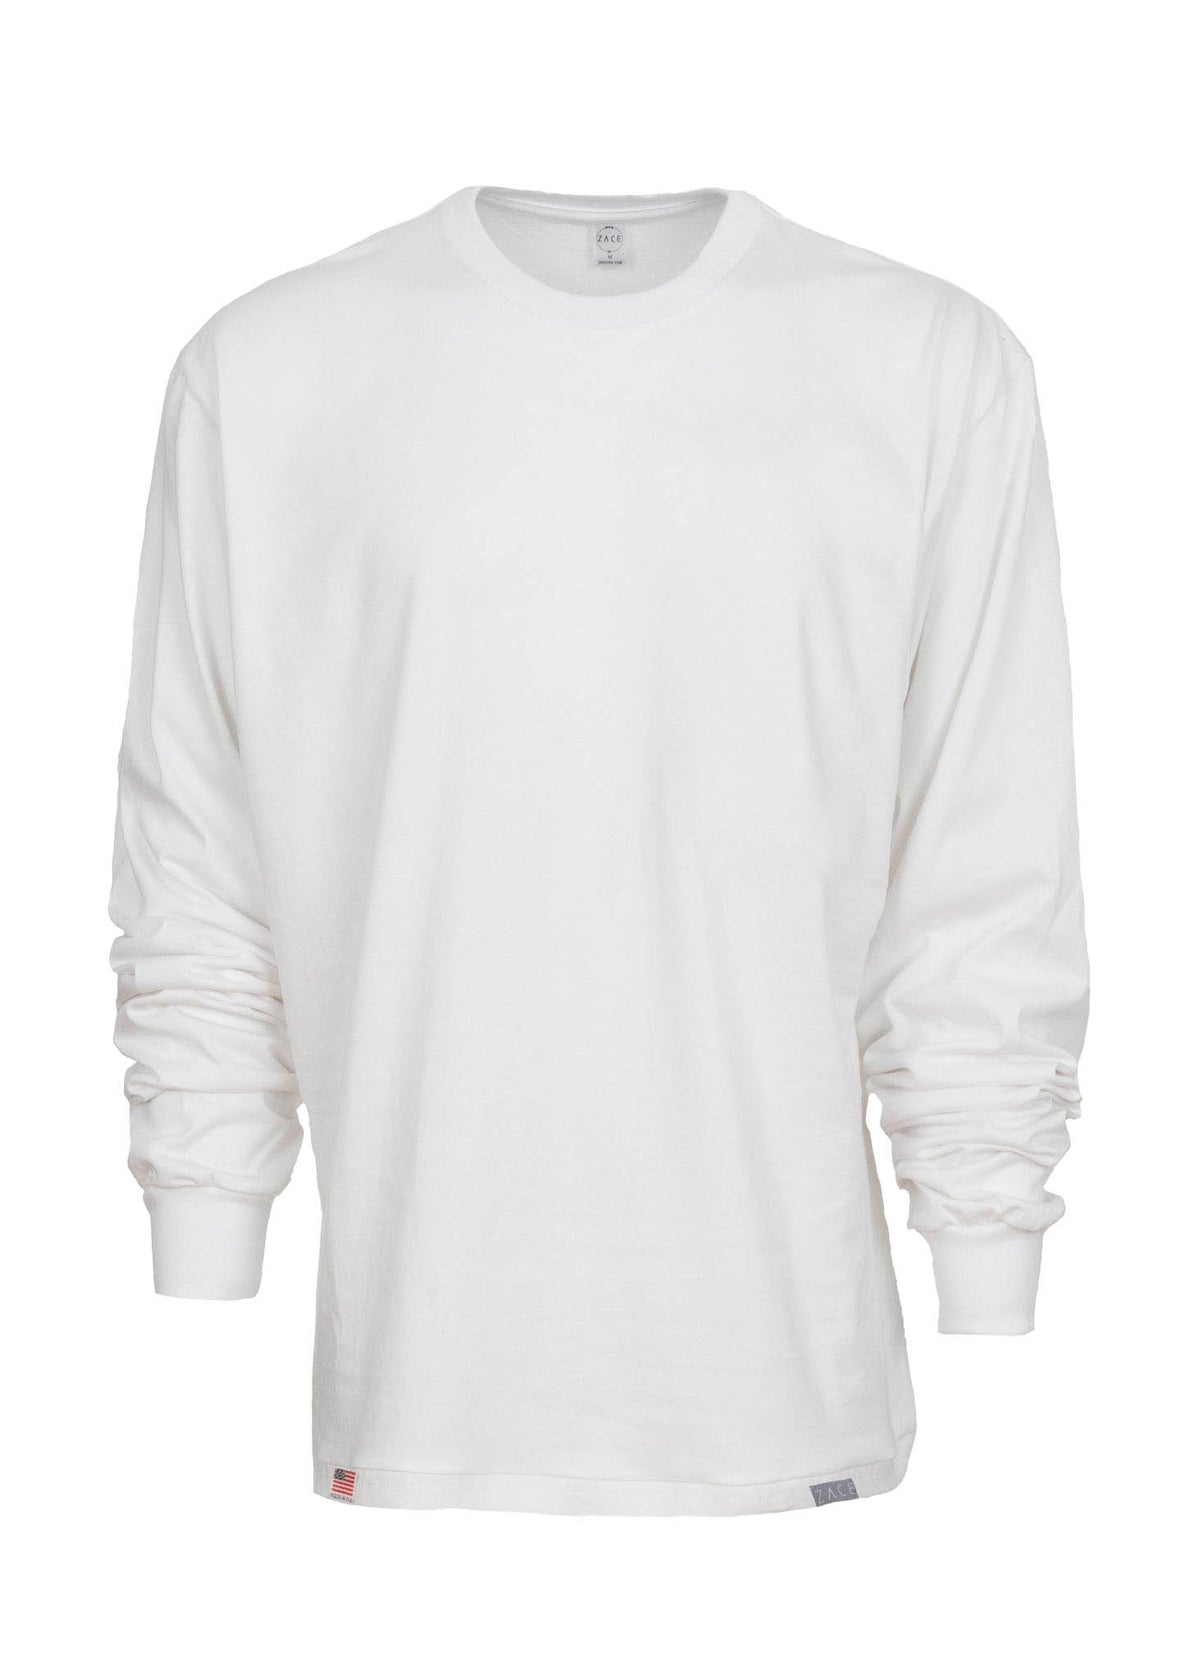 Long Sleeve Tee Shirt White